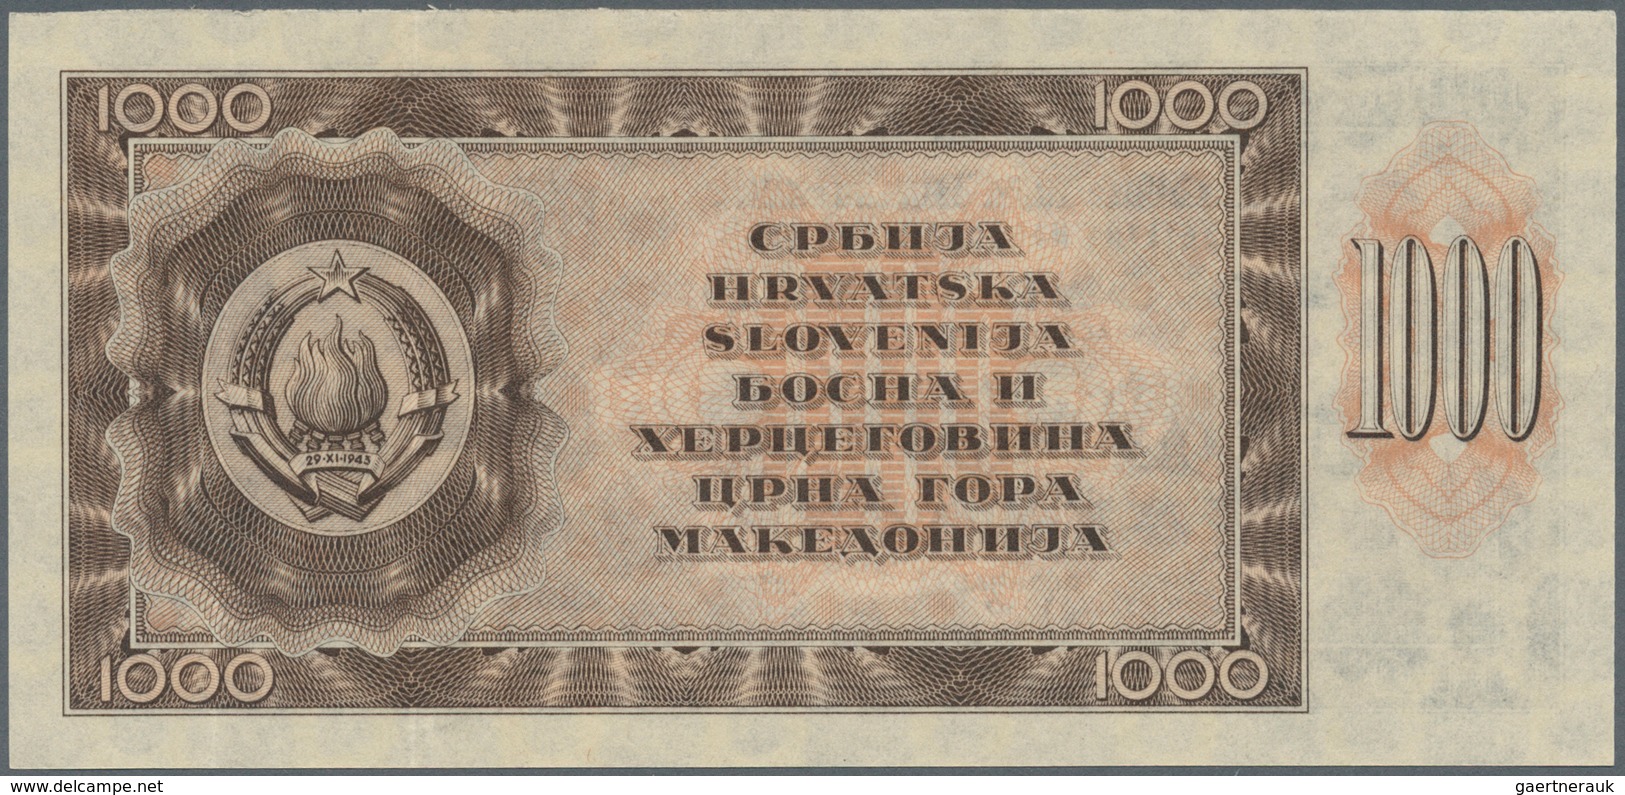 Yugoslavia / Jugoslavien: 1000 Dinara 1950, P.67x (not Issued), Minor Creases In The Paper, Tiny Cut - Jugoslawien